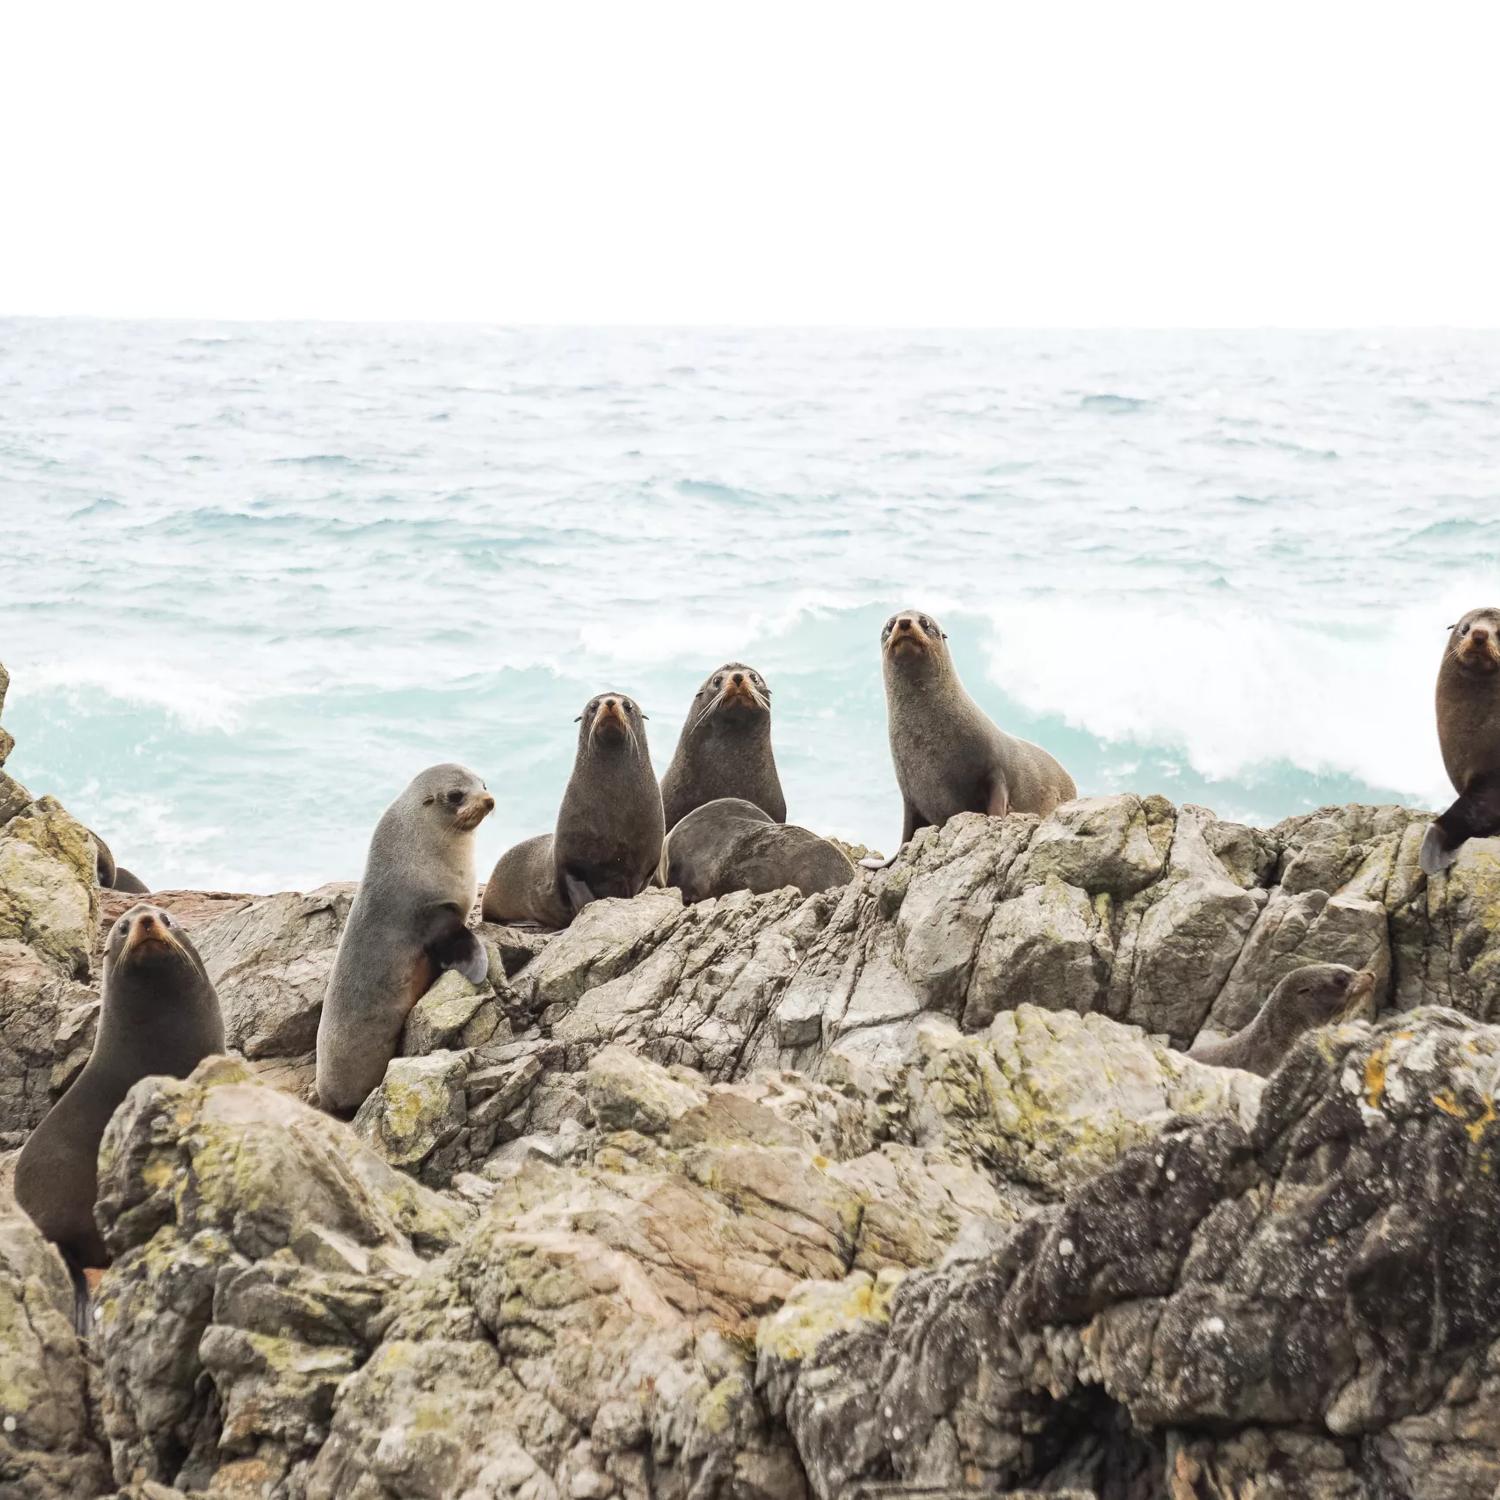 Nine fur seals sit on the jagged rocks at Turakirae Head with waves crashing behind them.